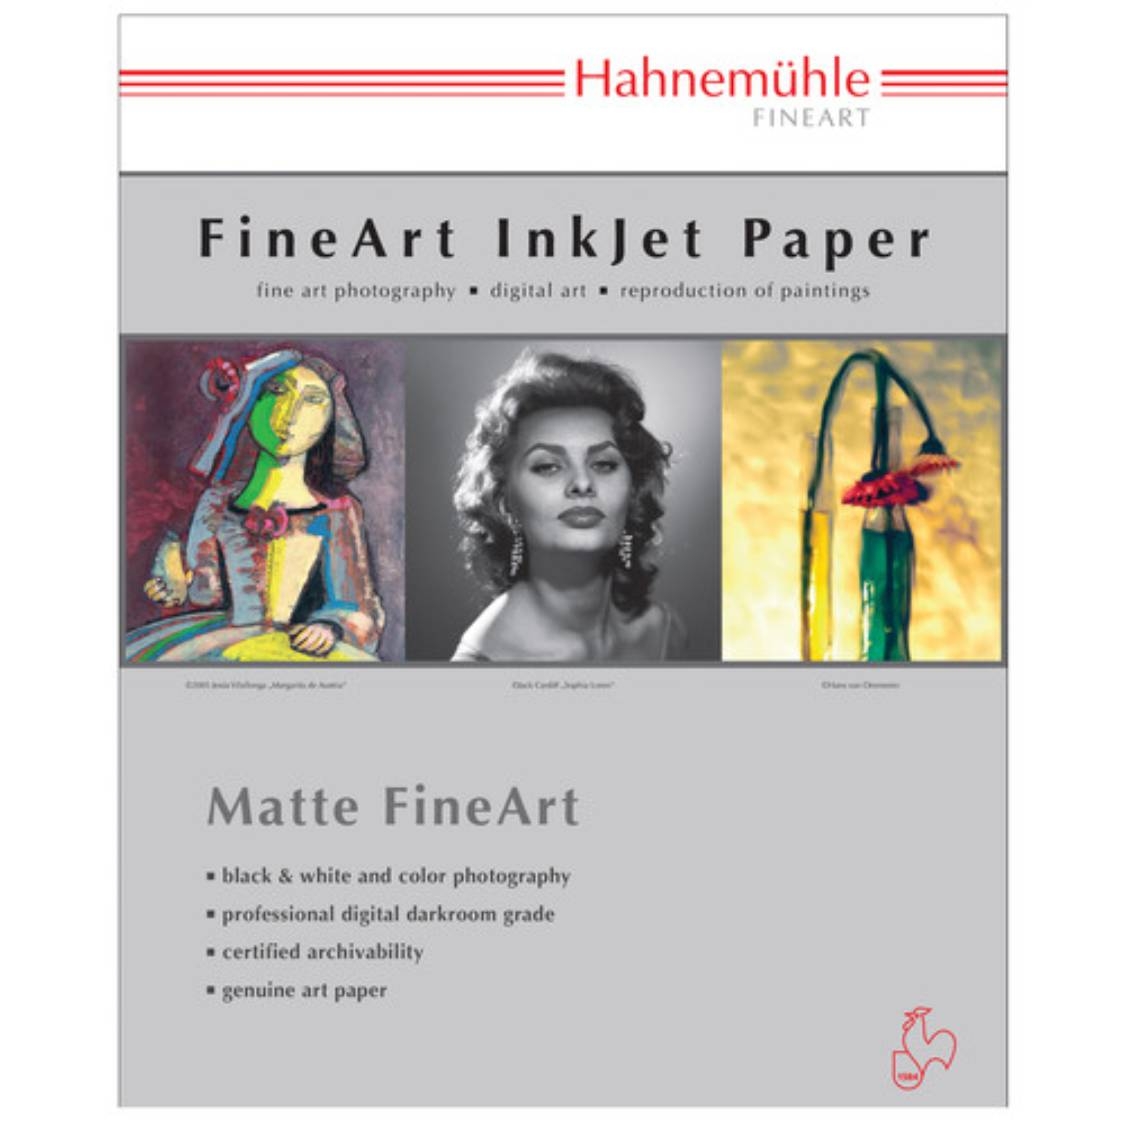 Hahnemuhle William Turner Matte Fine Art Paper 8.5x11 (25 Sheets)